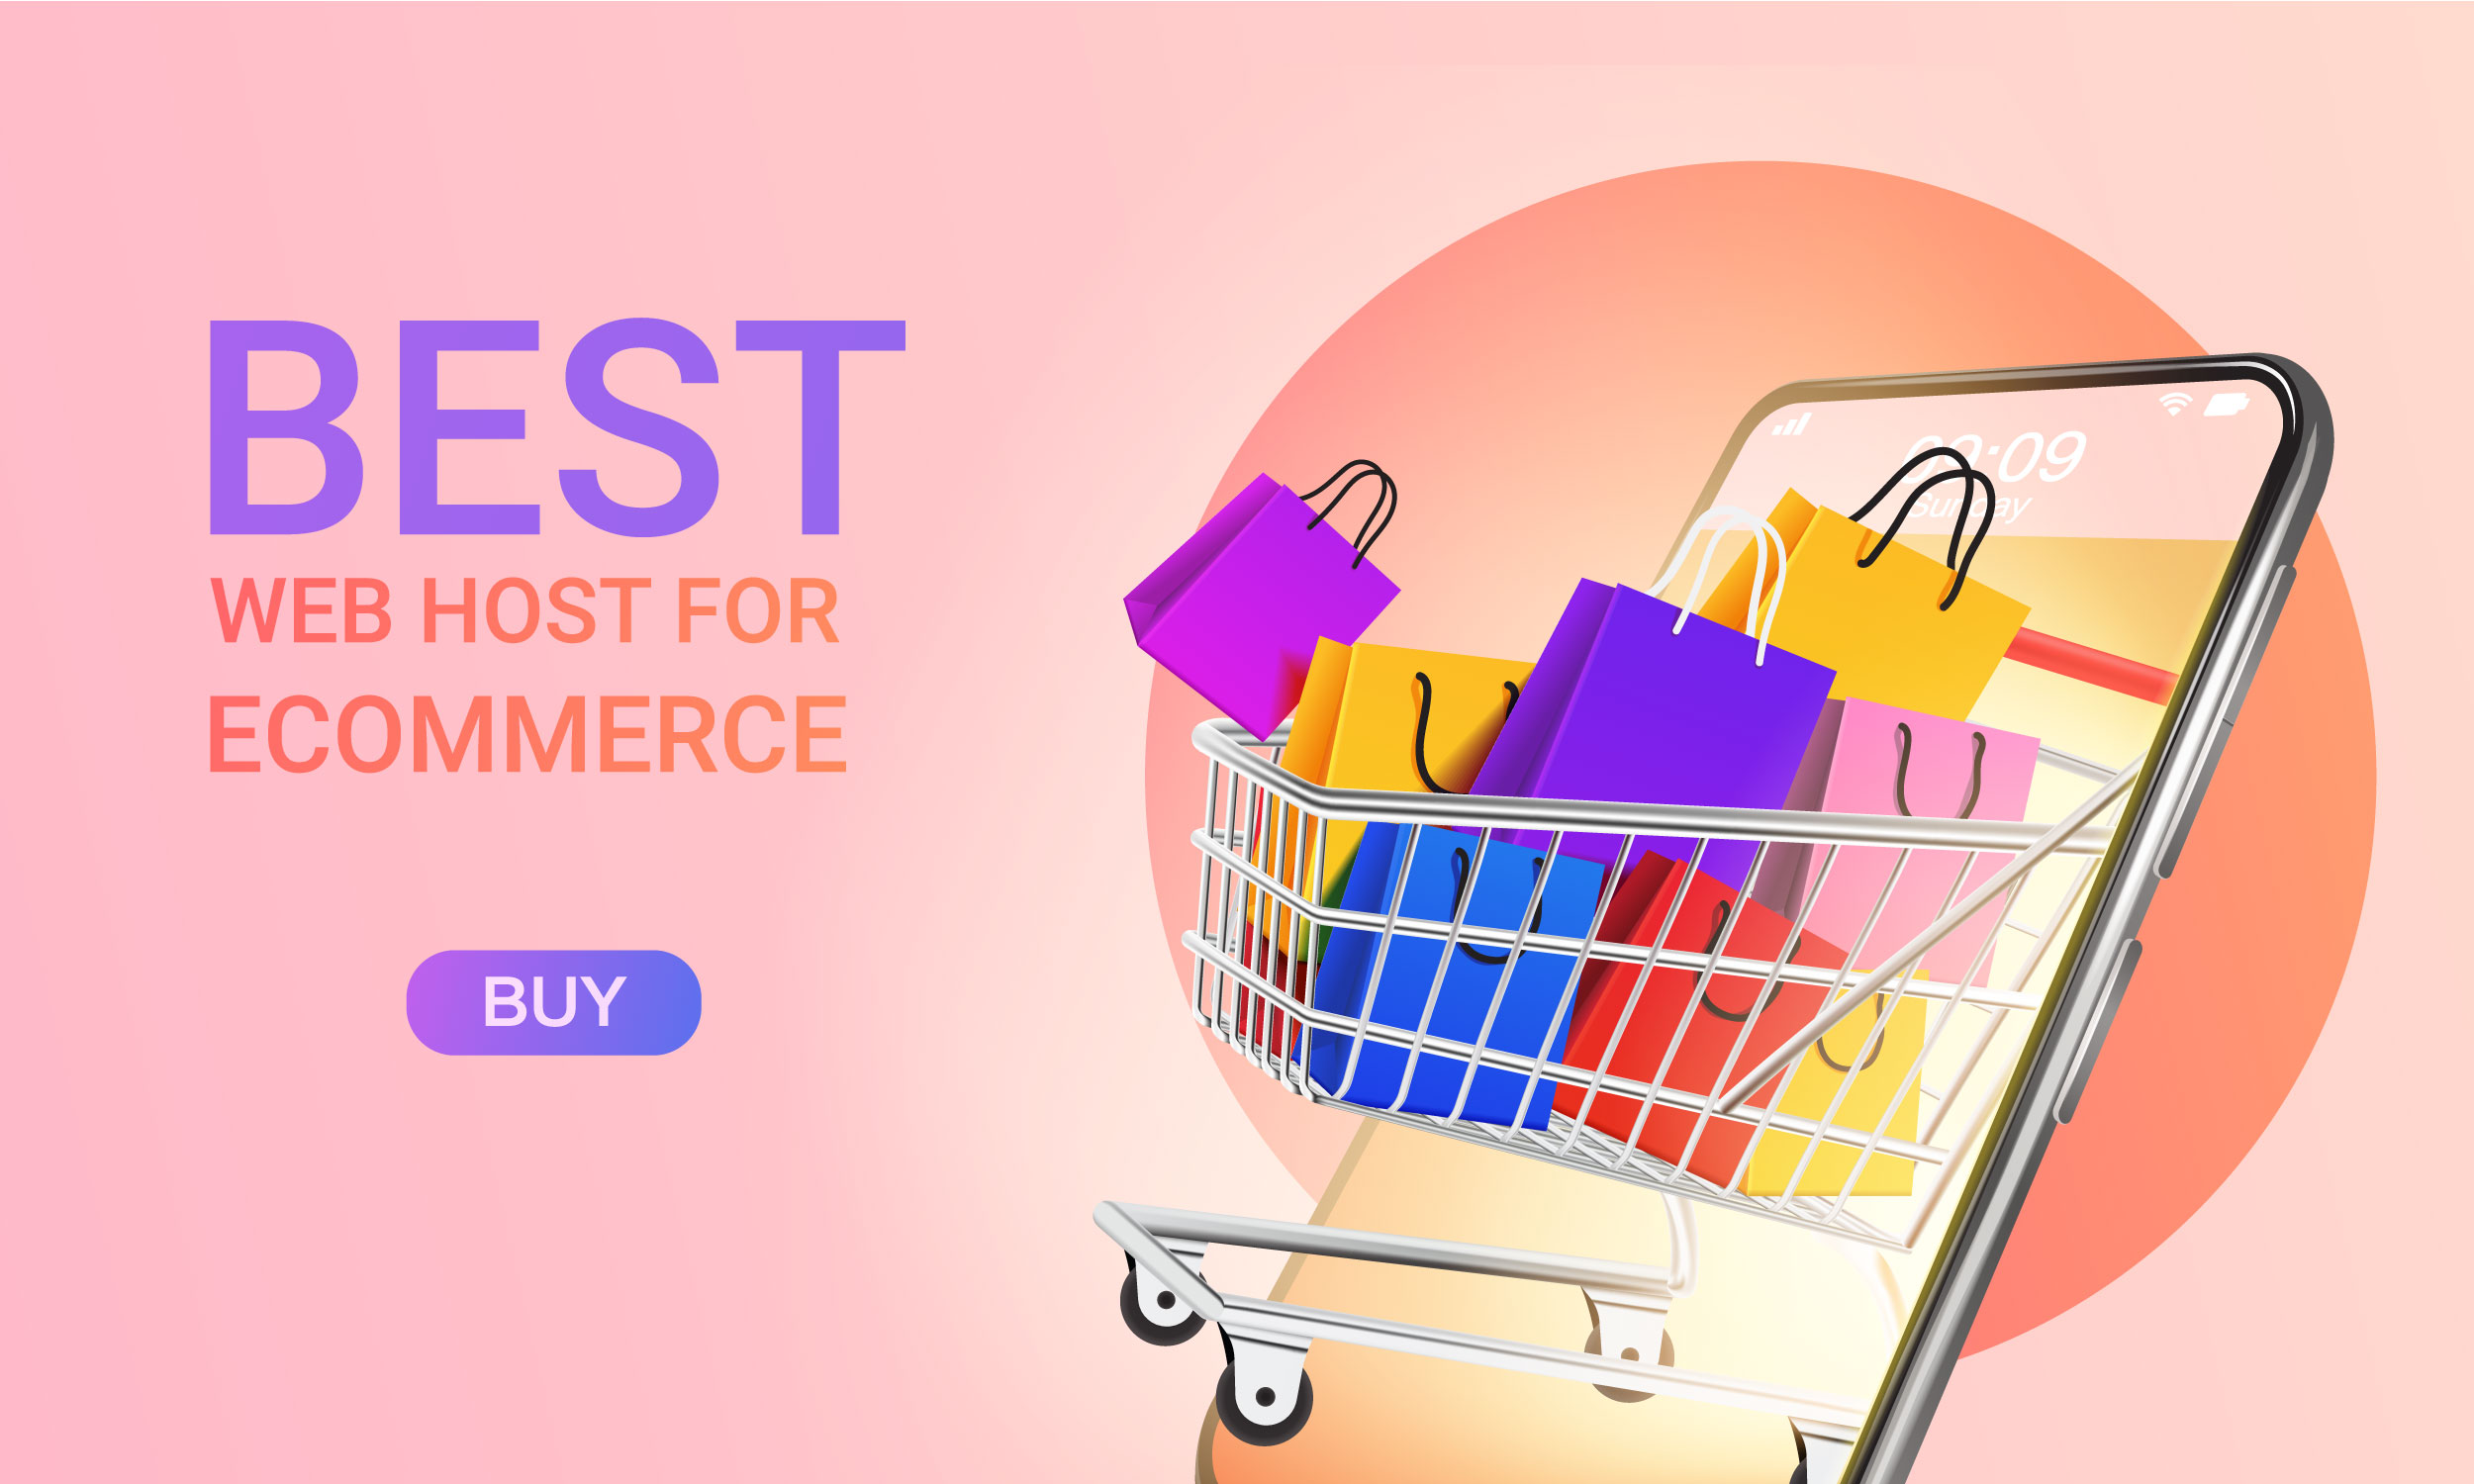 Best Web Host for ecommerce